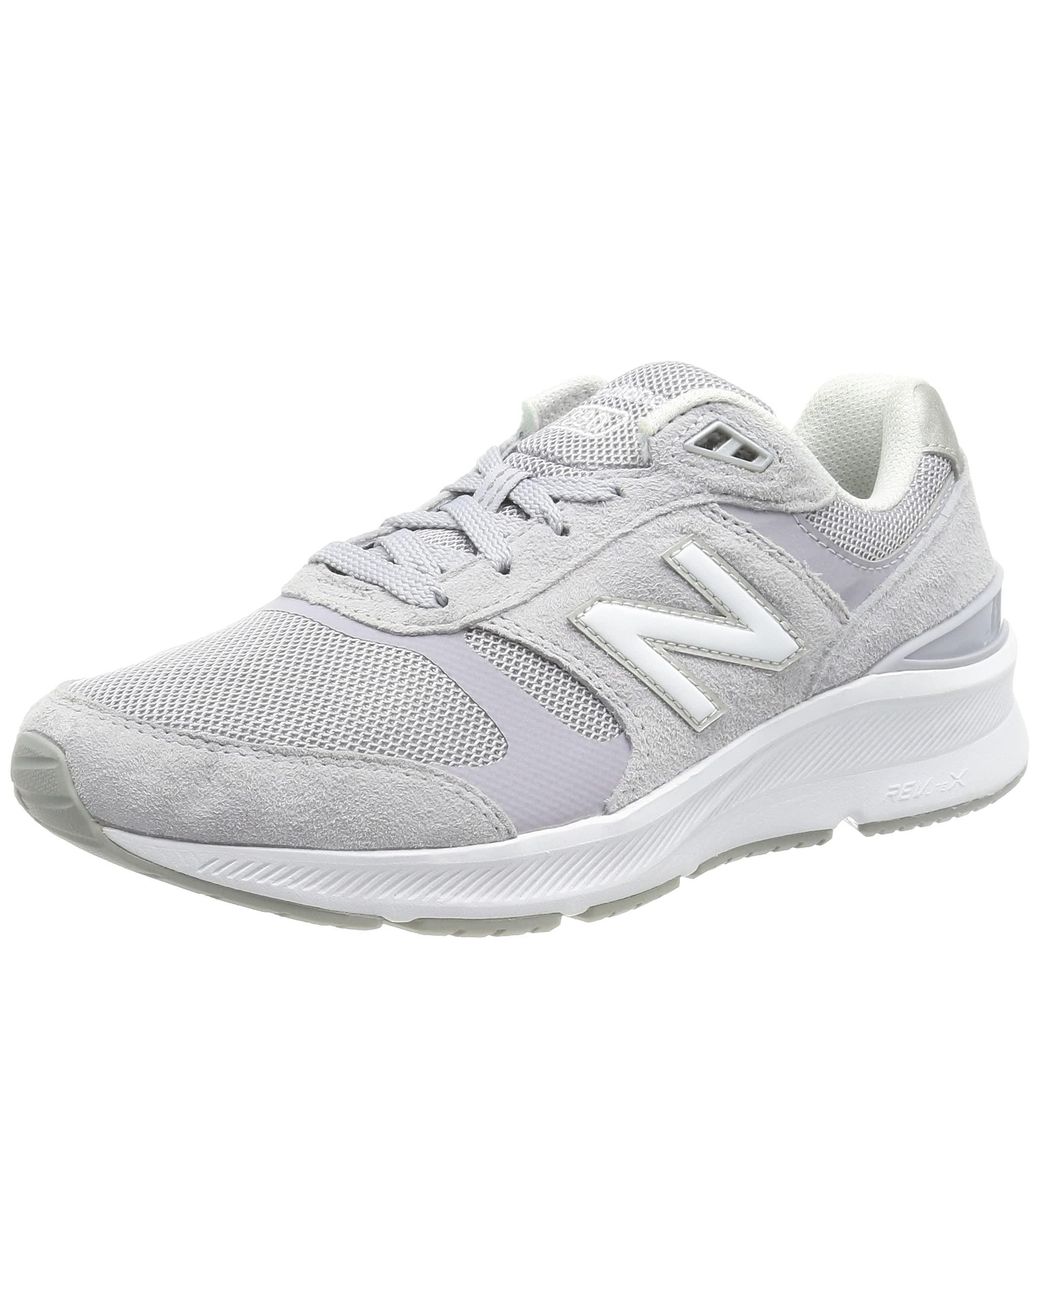 New Balance 880v5 Walking Shoe in Grey | Lyst UK